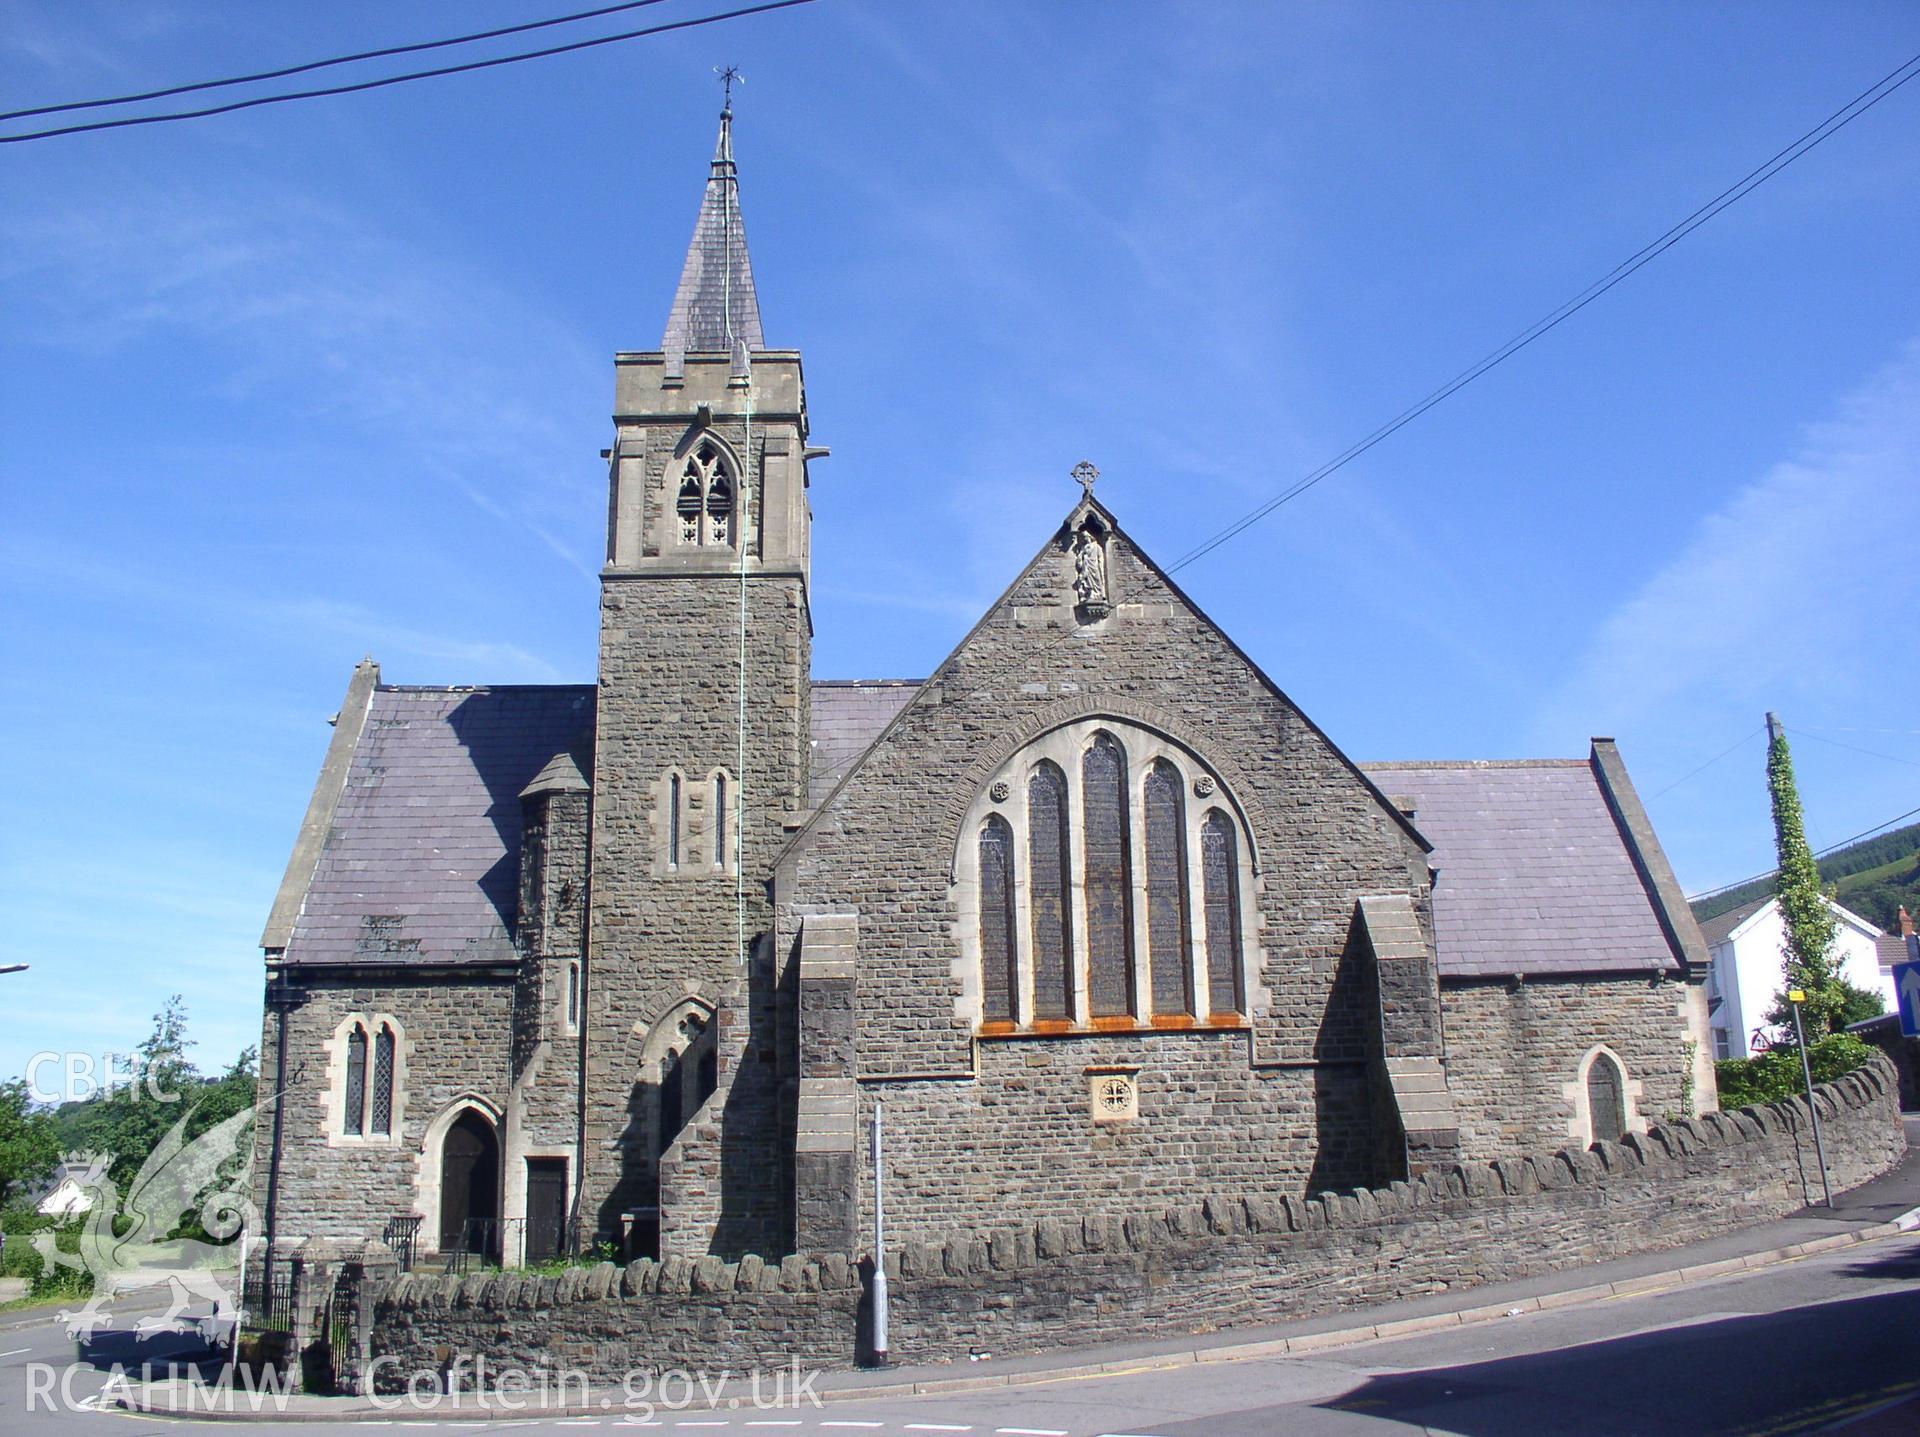 Colour digital photograph showing the exterior of St Margaret's Church, Mountain Ash; Glamorgan.